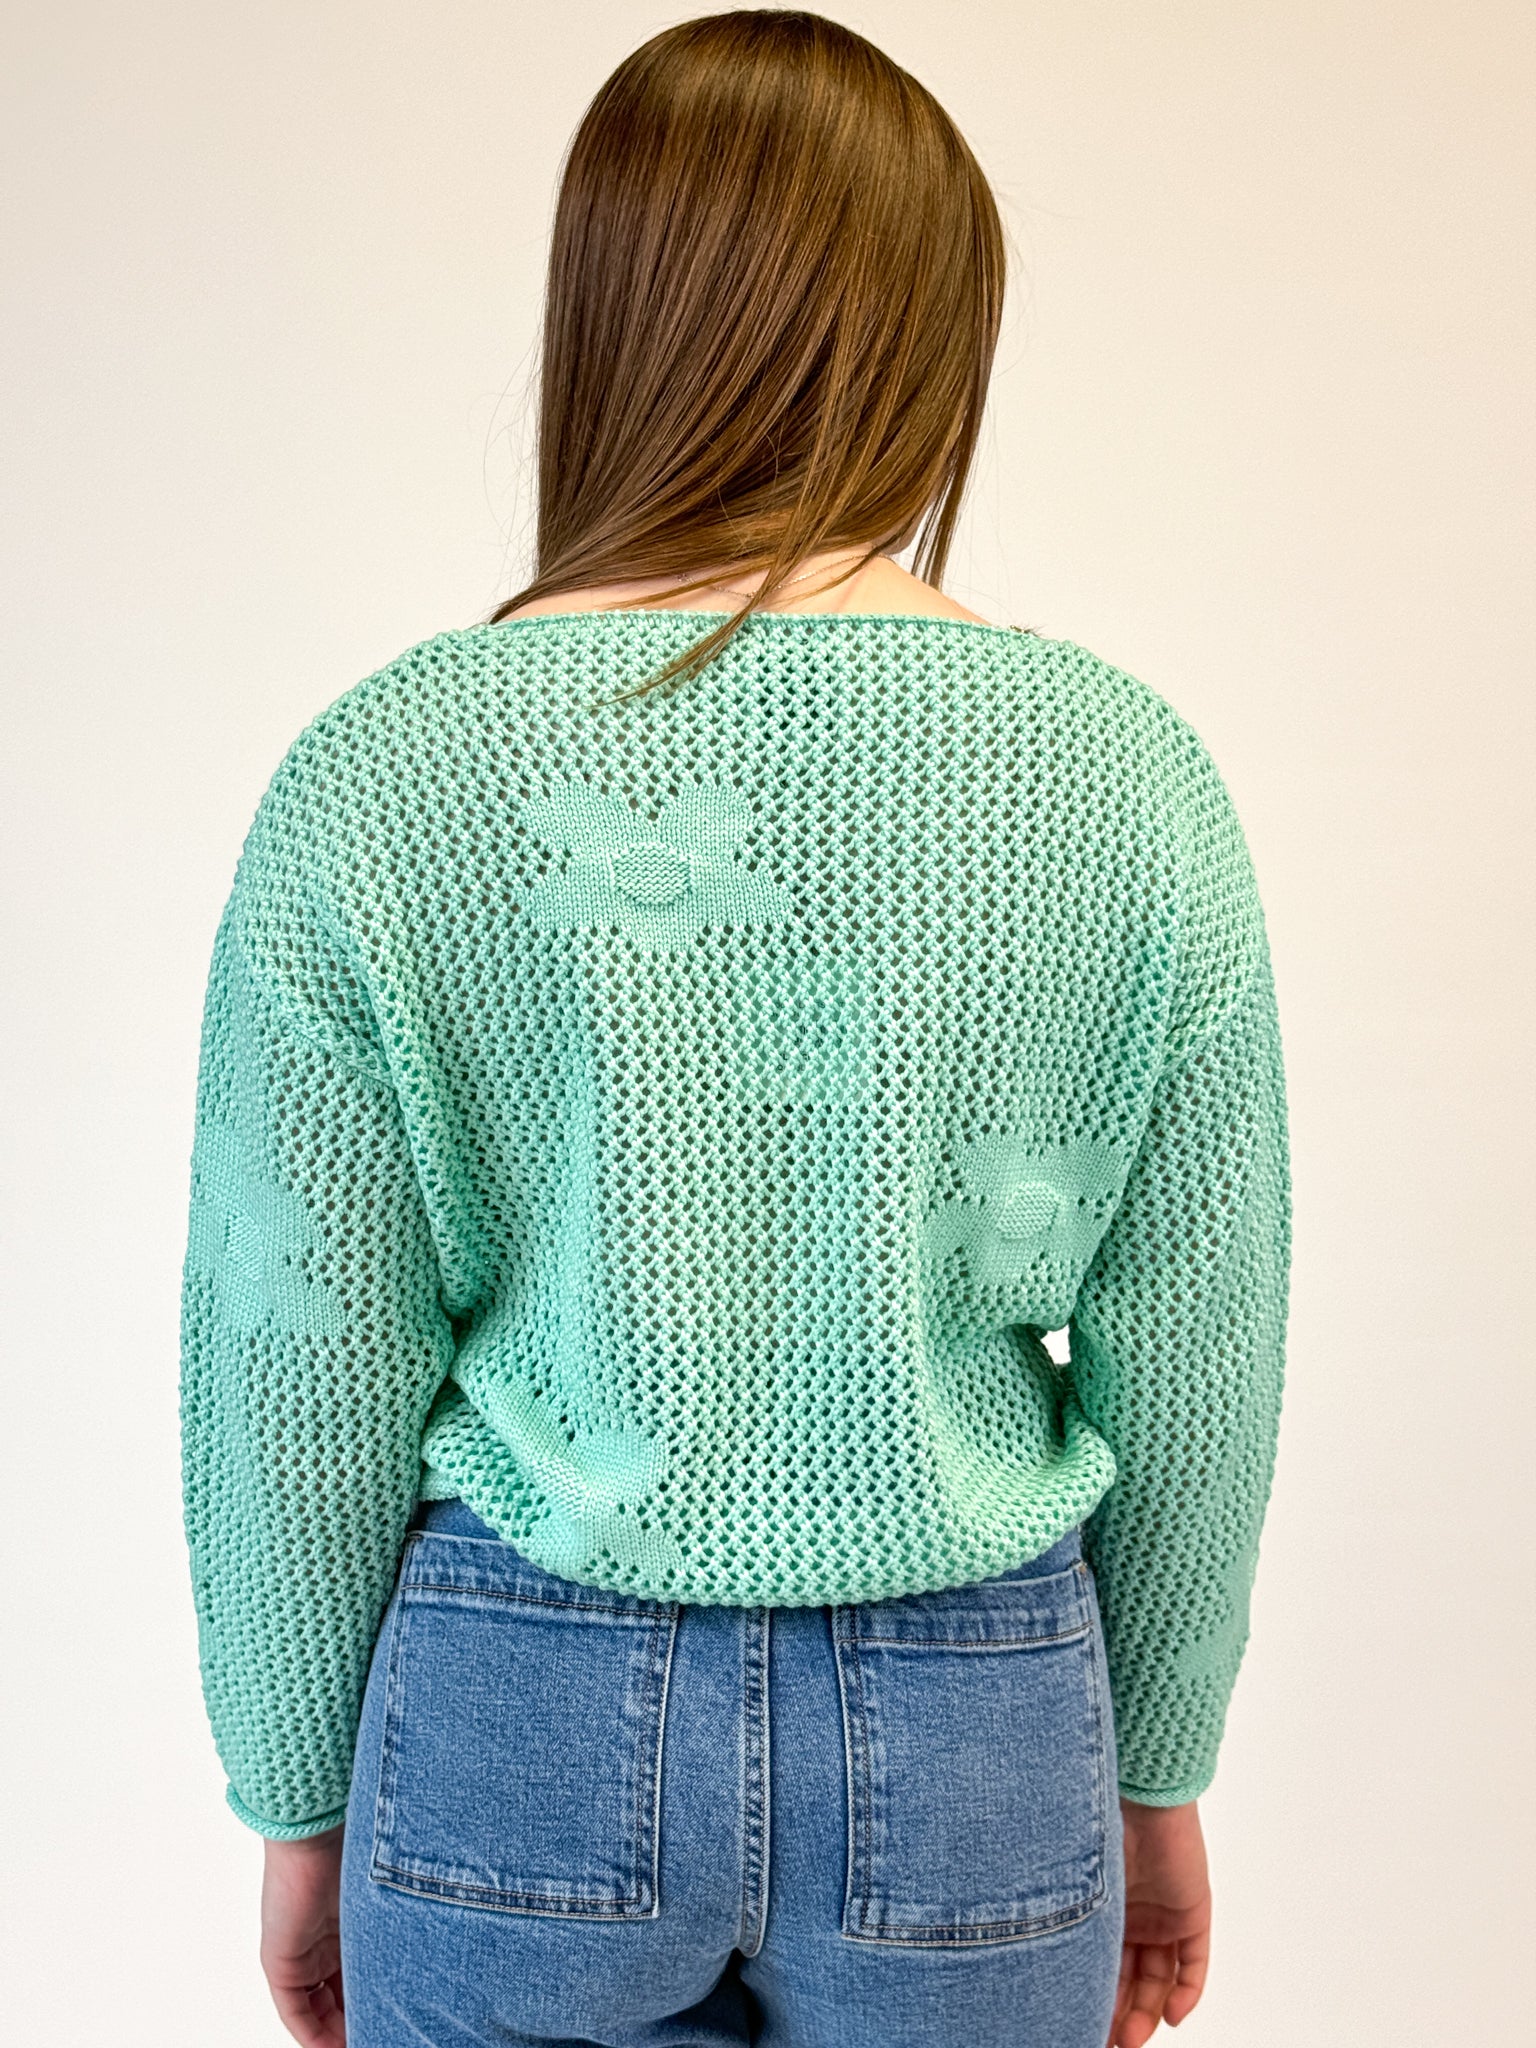 Molly Bracken Knitted Flower Sweater